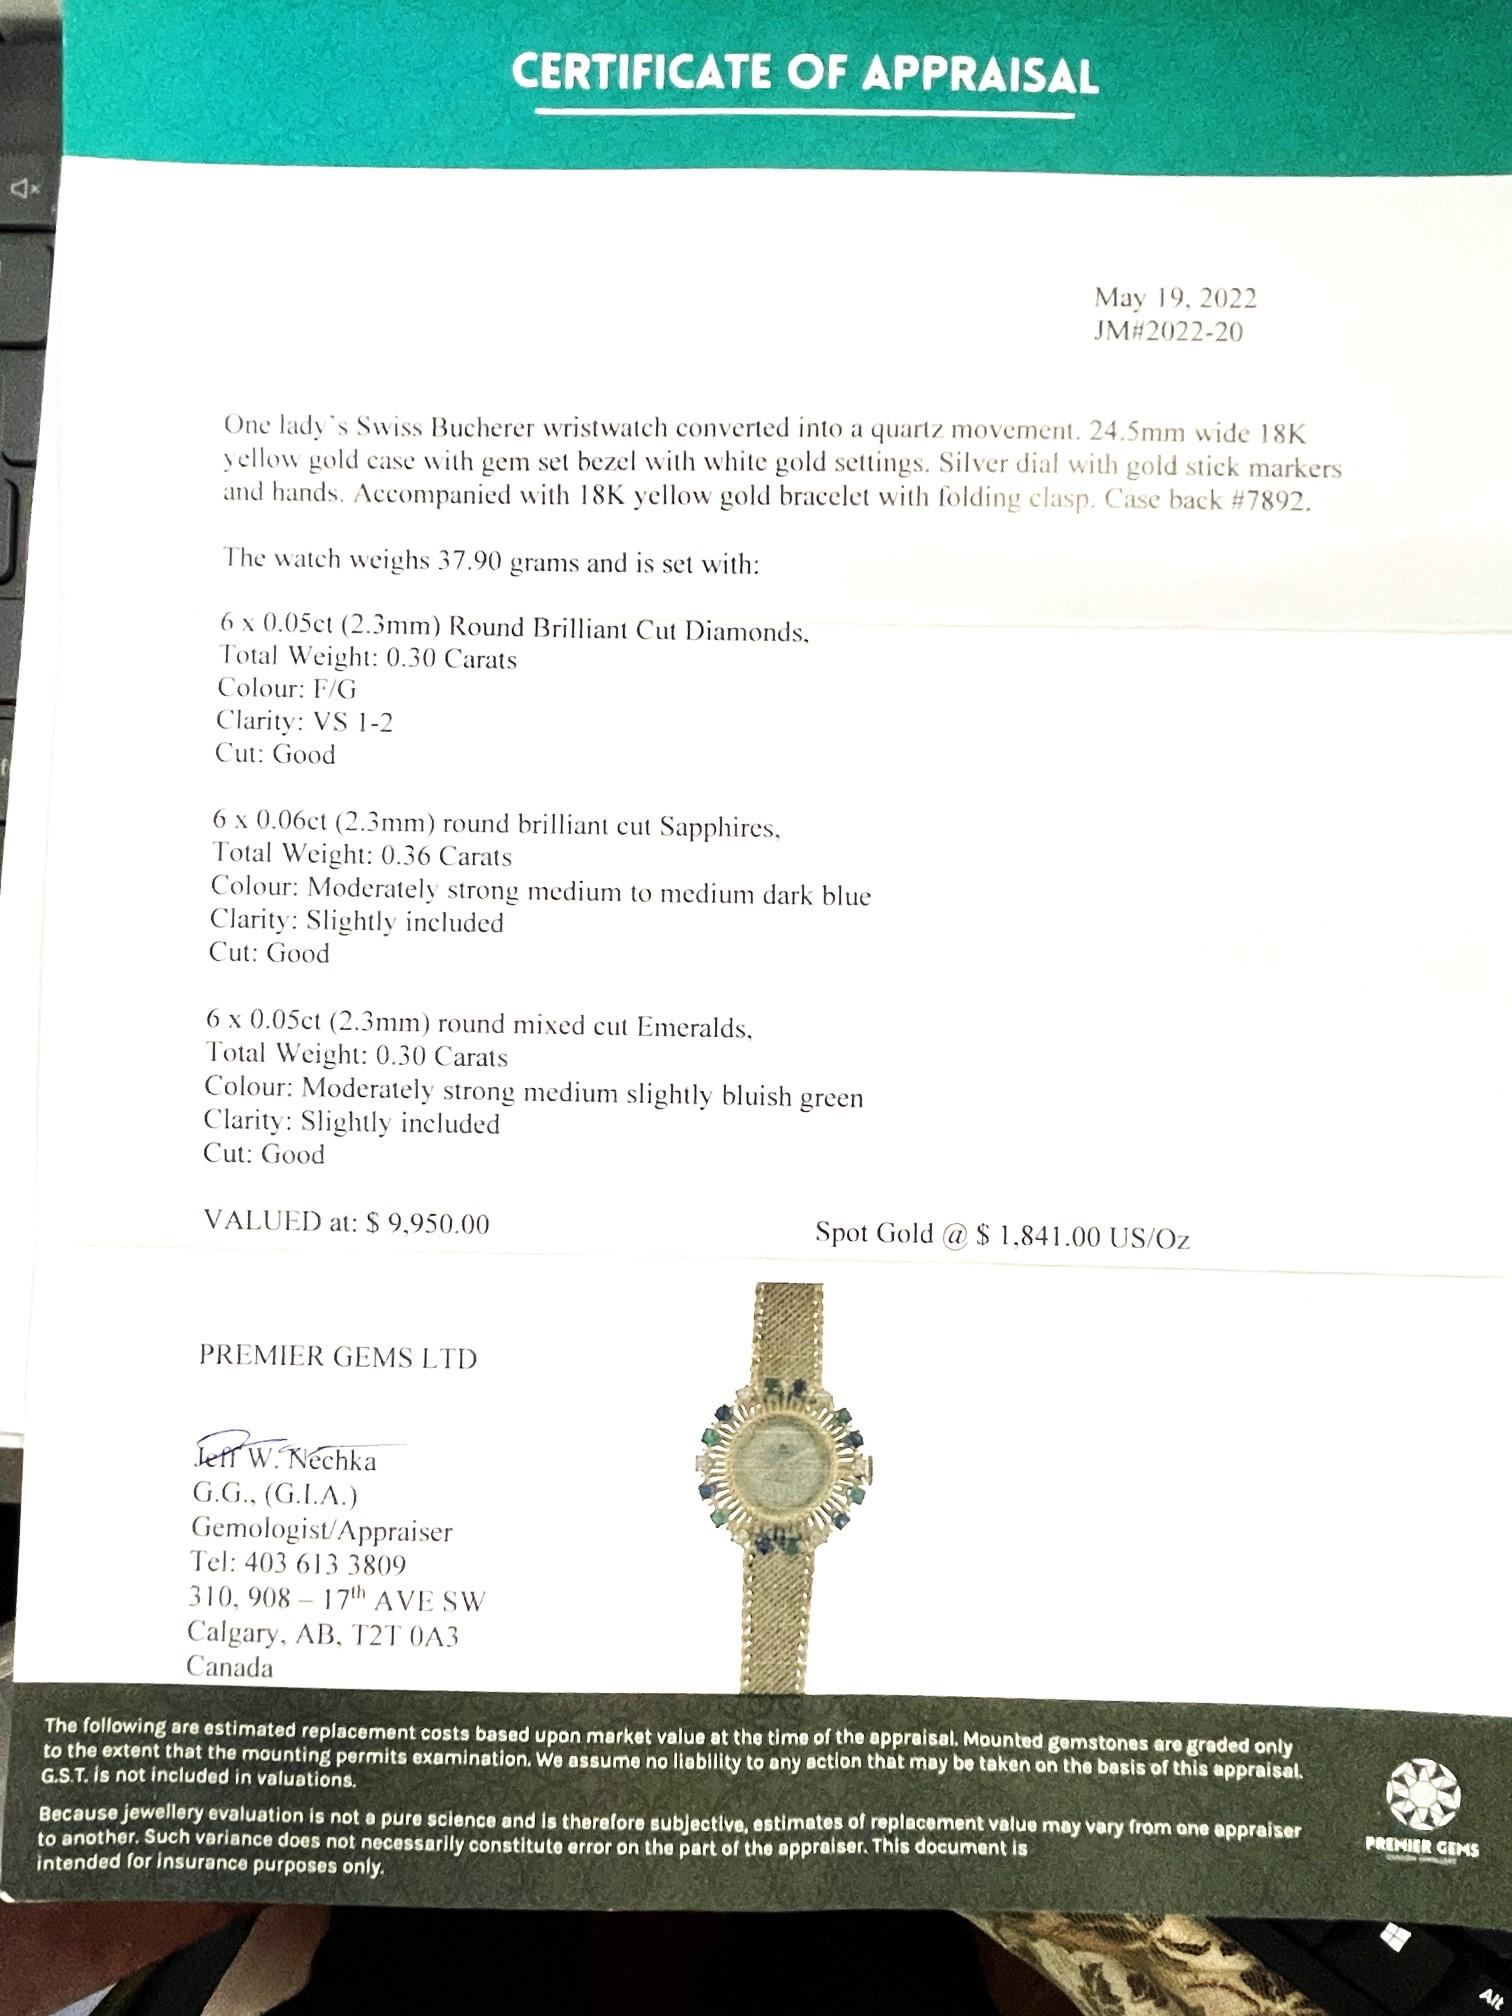 18k Bucherer Quartz Watch with Diamonds, Sapphires & Emeralds with GIA Appraisal 7